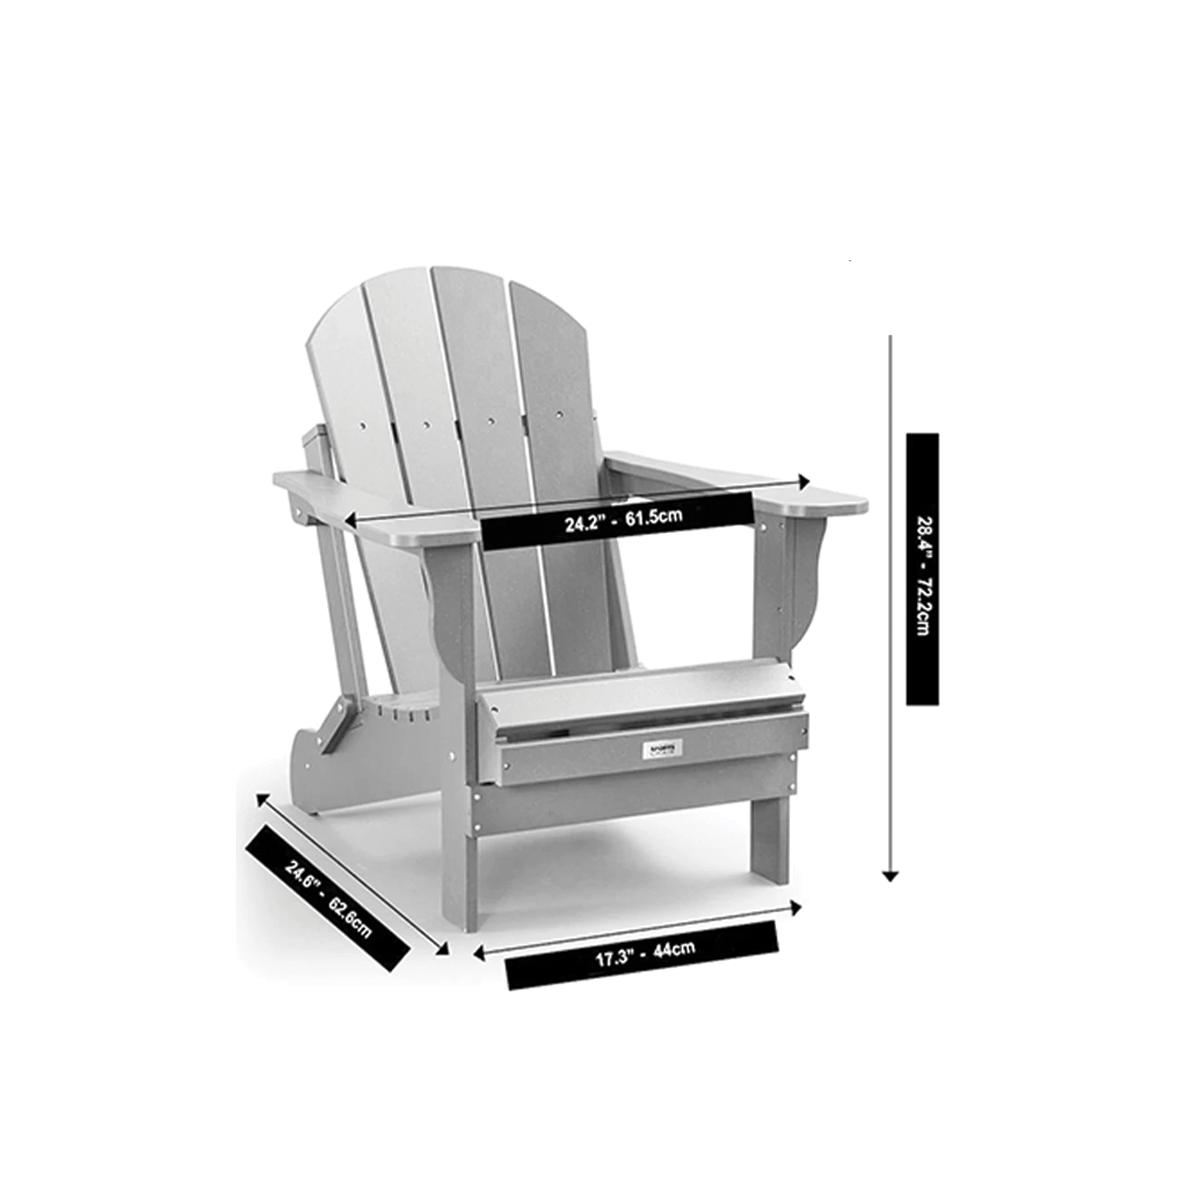 Barstool Sports Nooners White Chair Mini